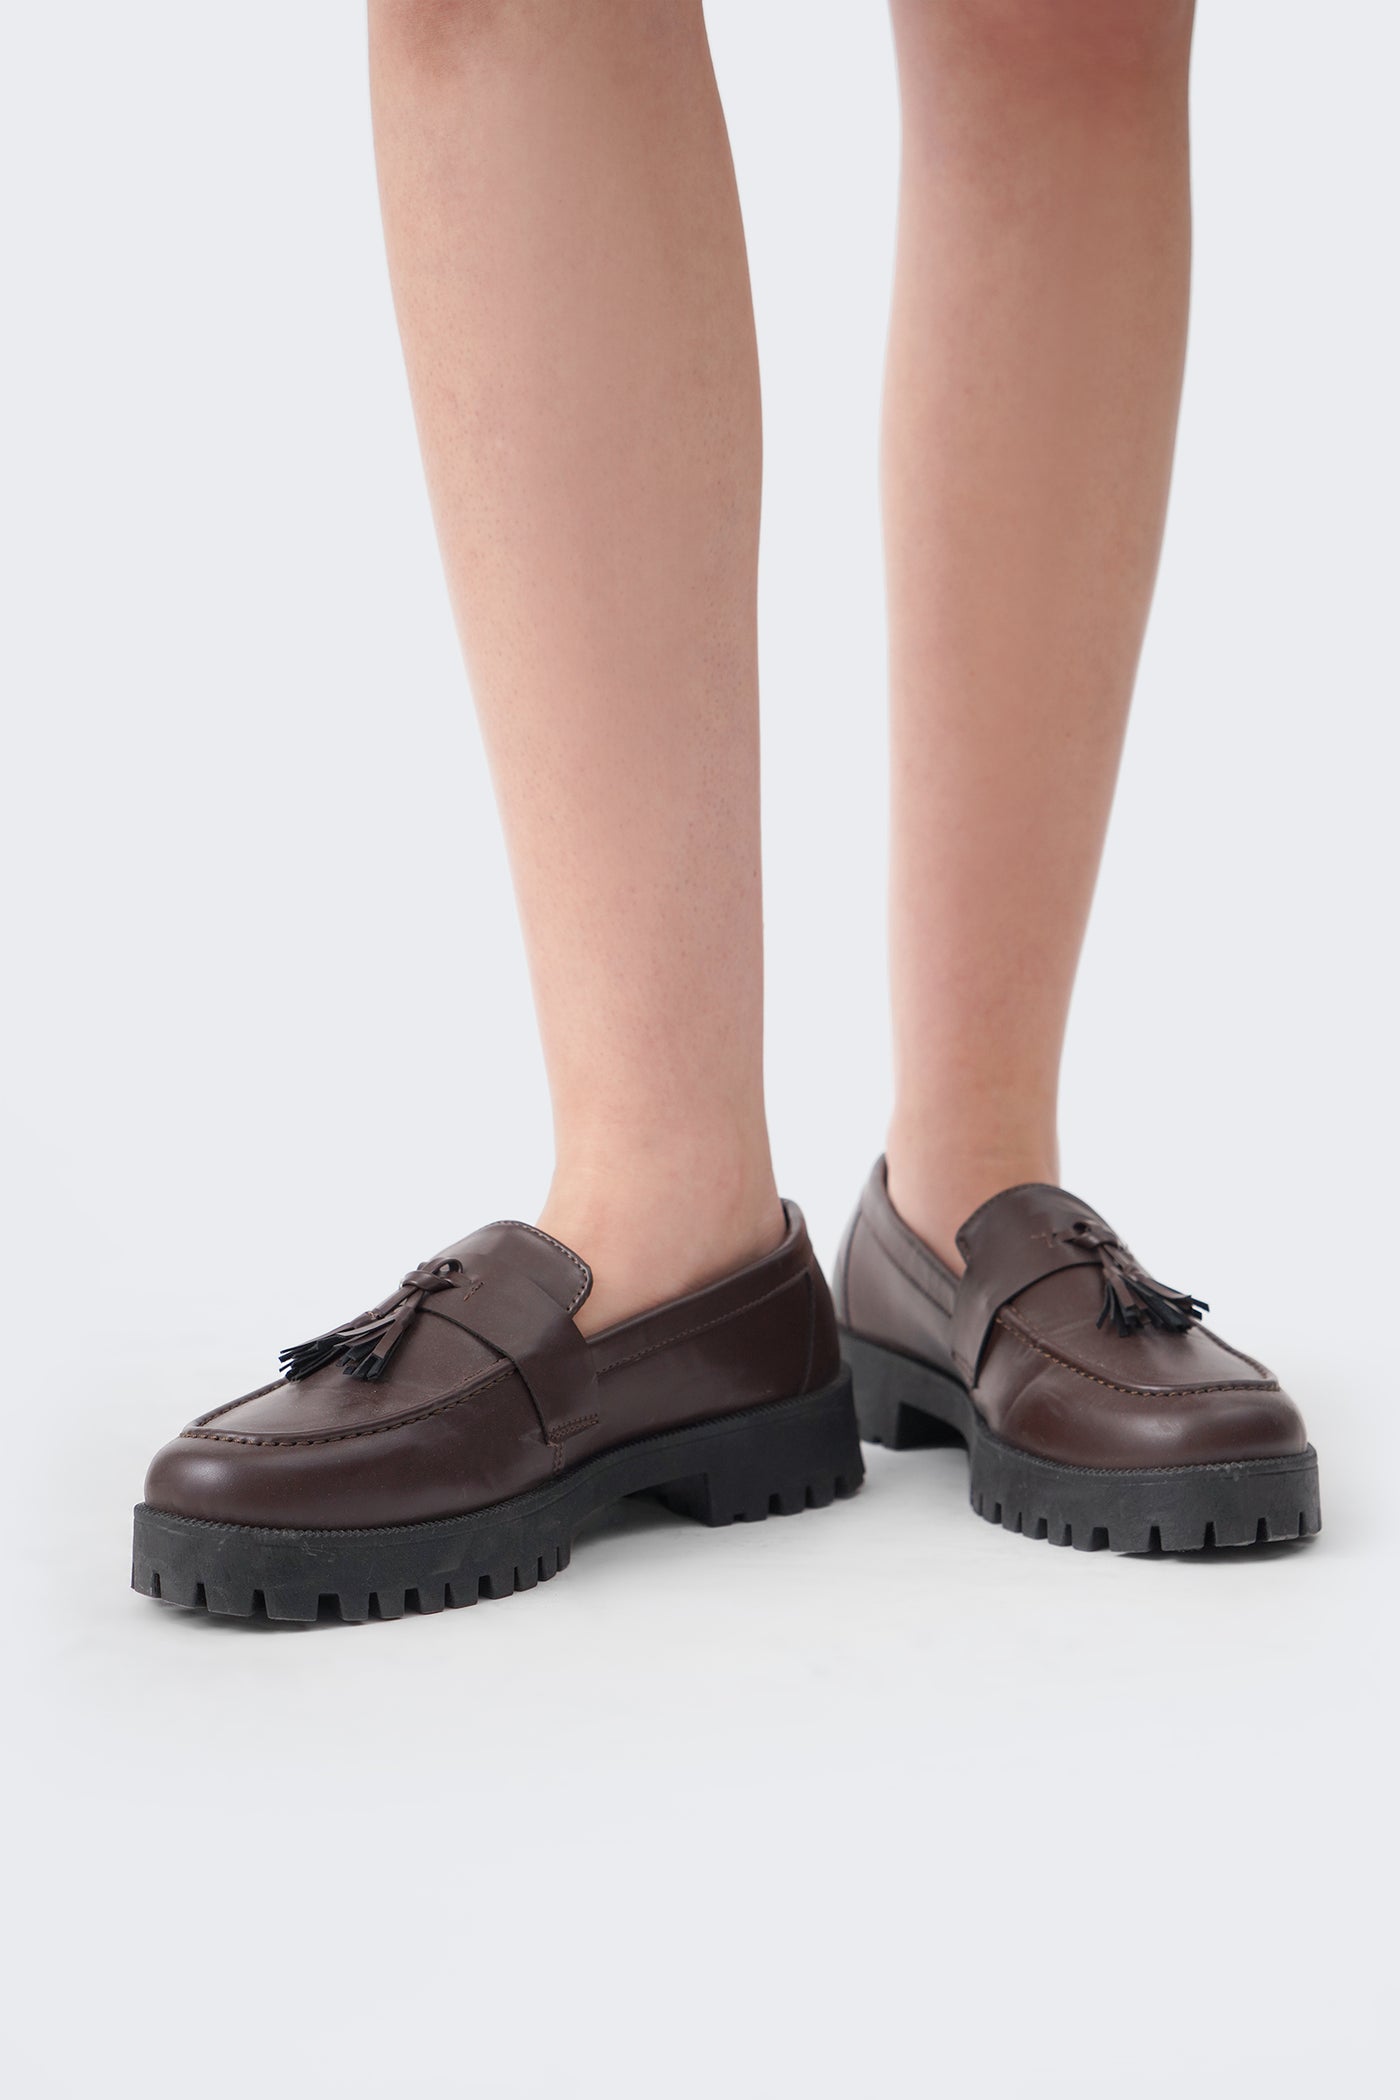 Women's Slip-On Loafers